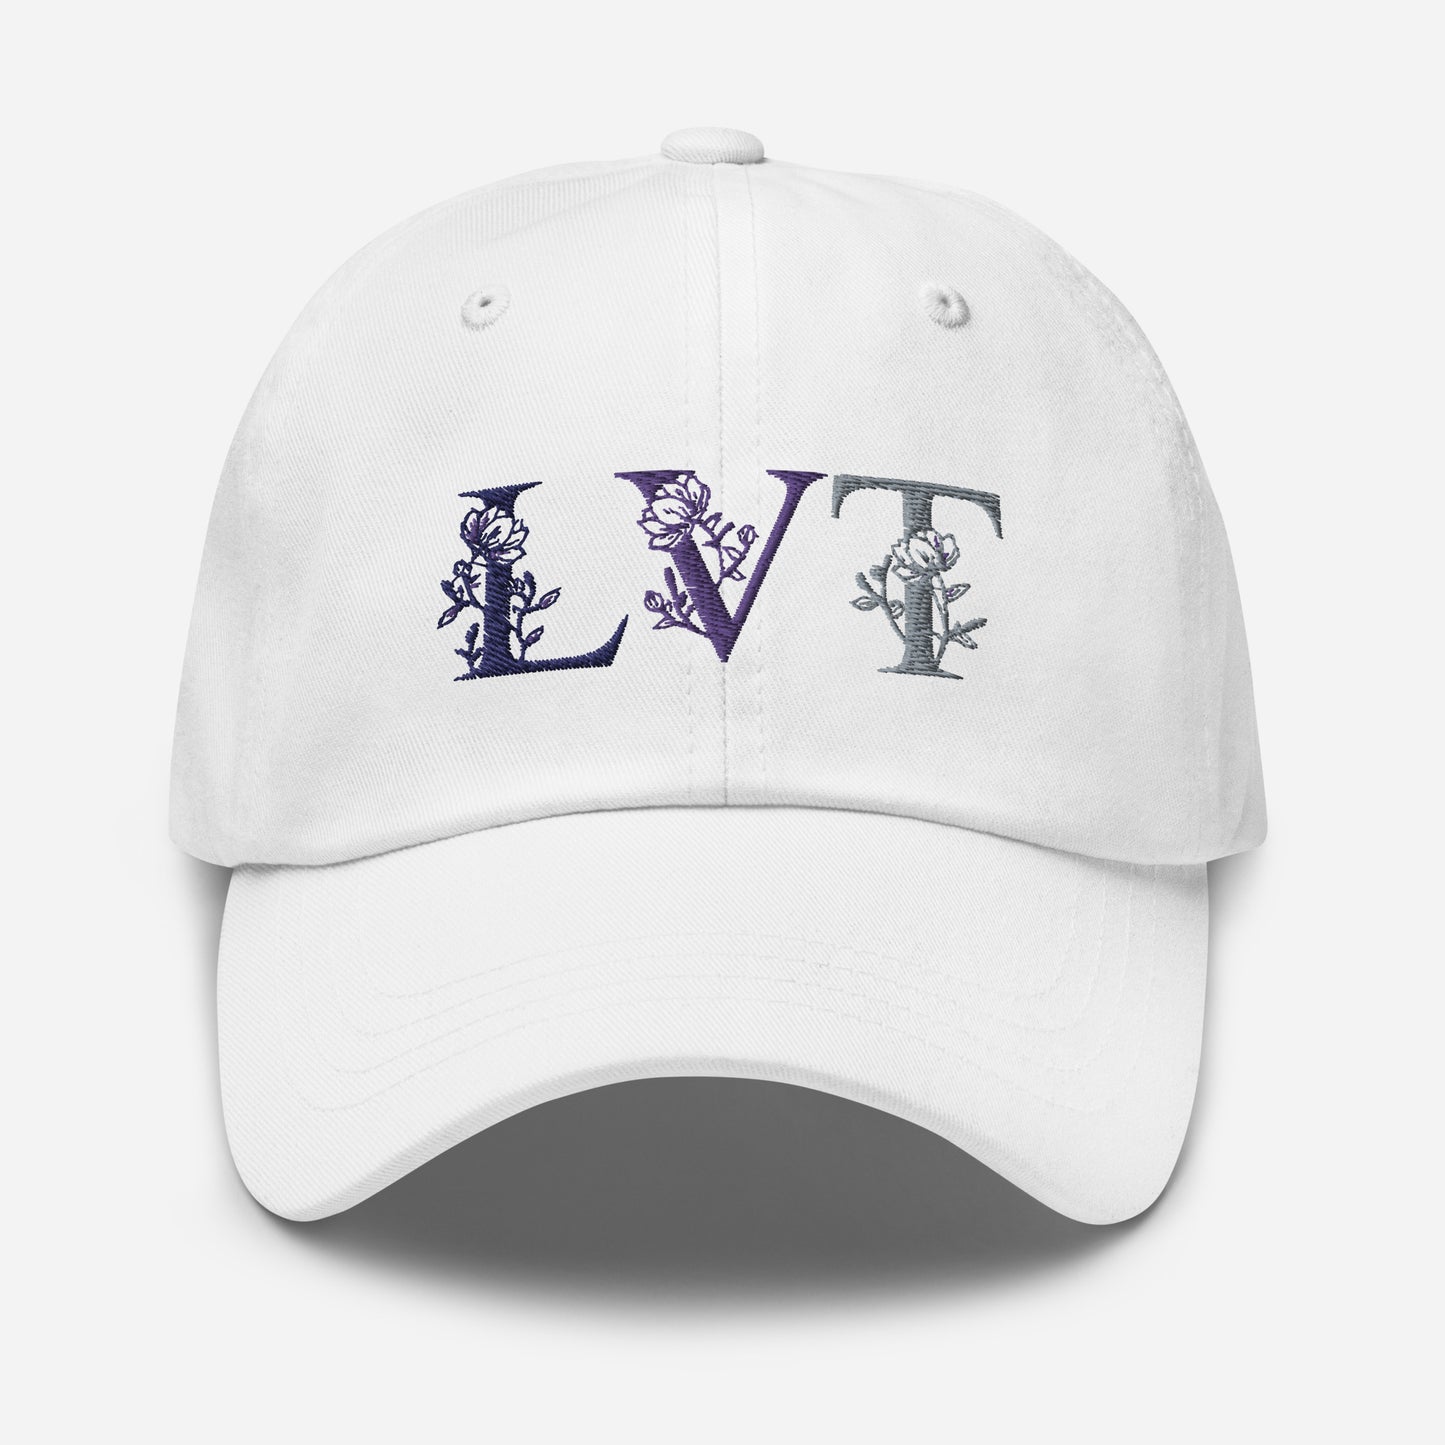 LVT Flowers Hat